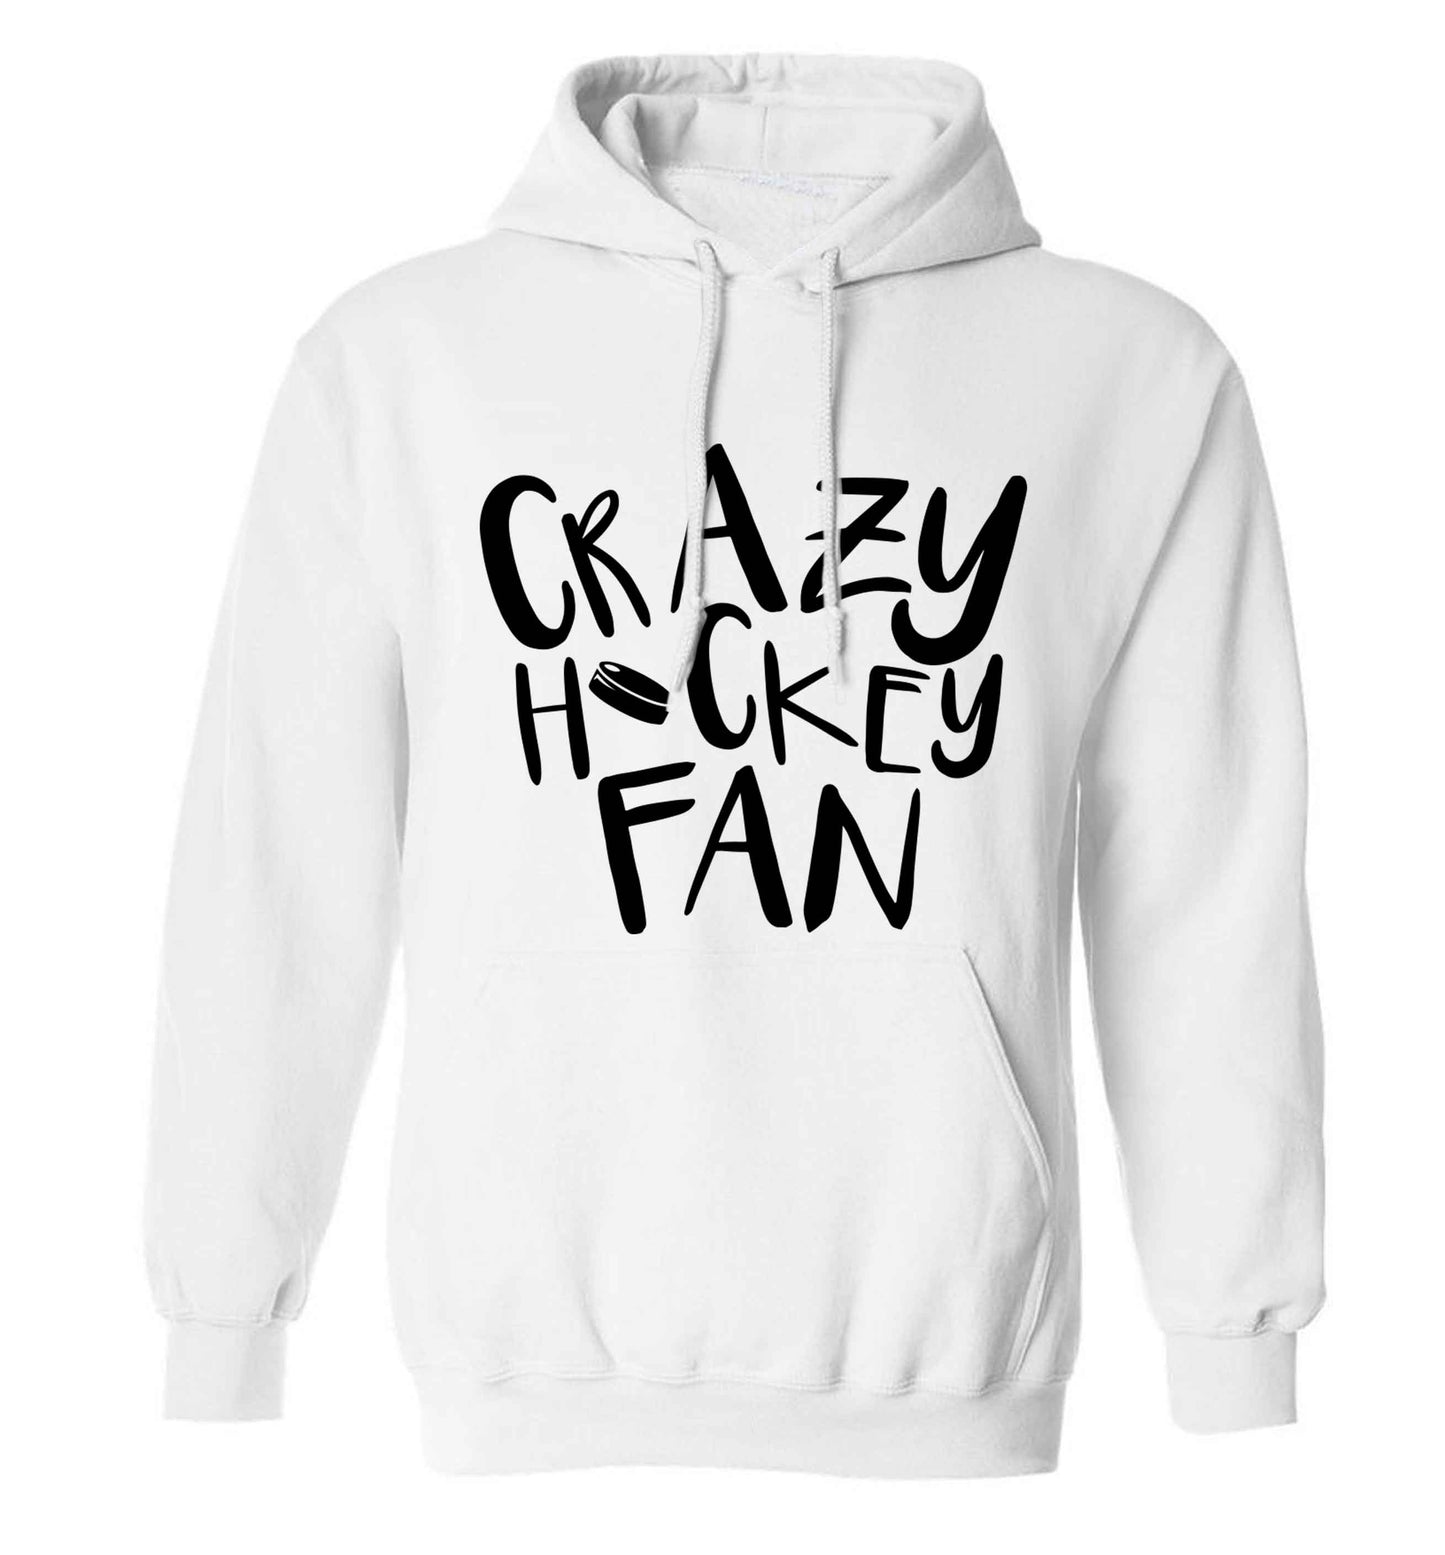 Crazy hockey fan adults unisex white hoodie 2XL